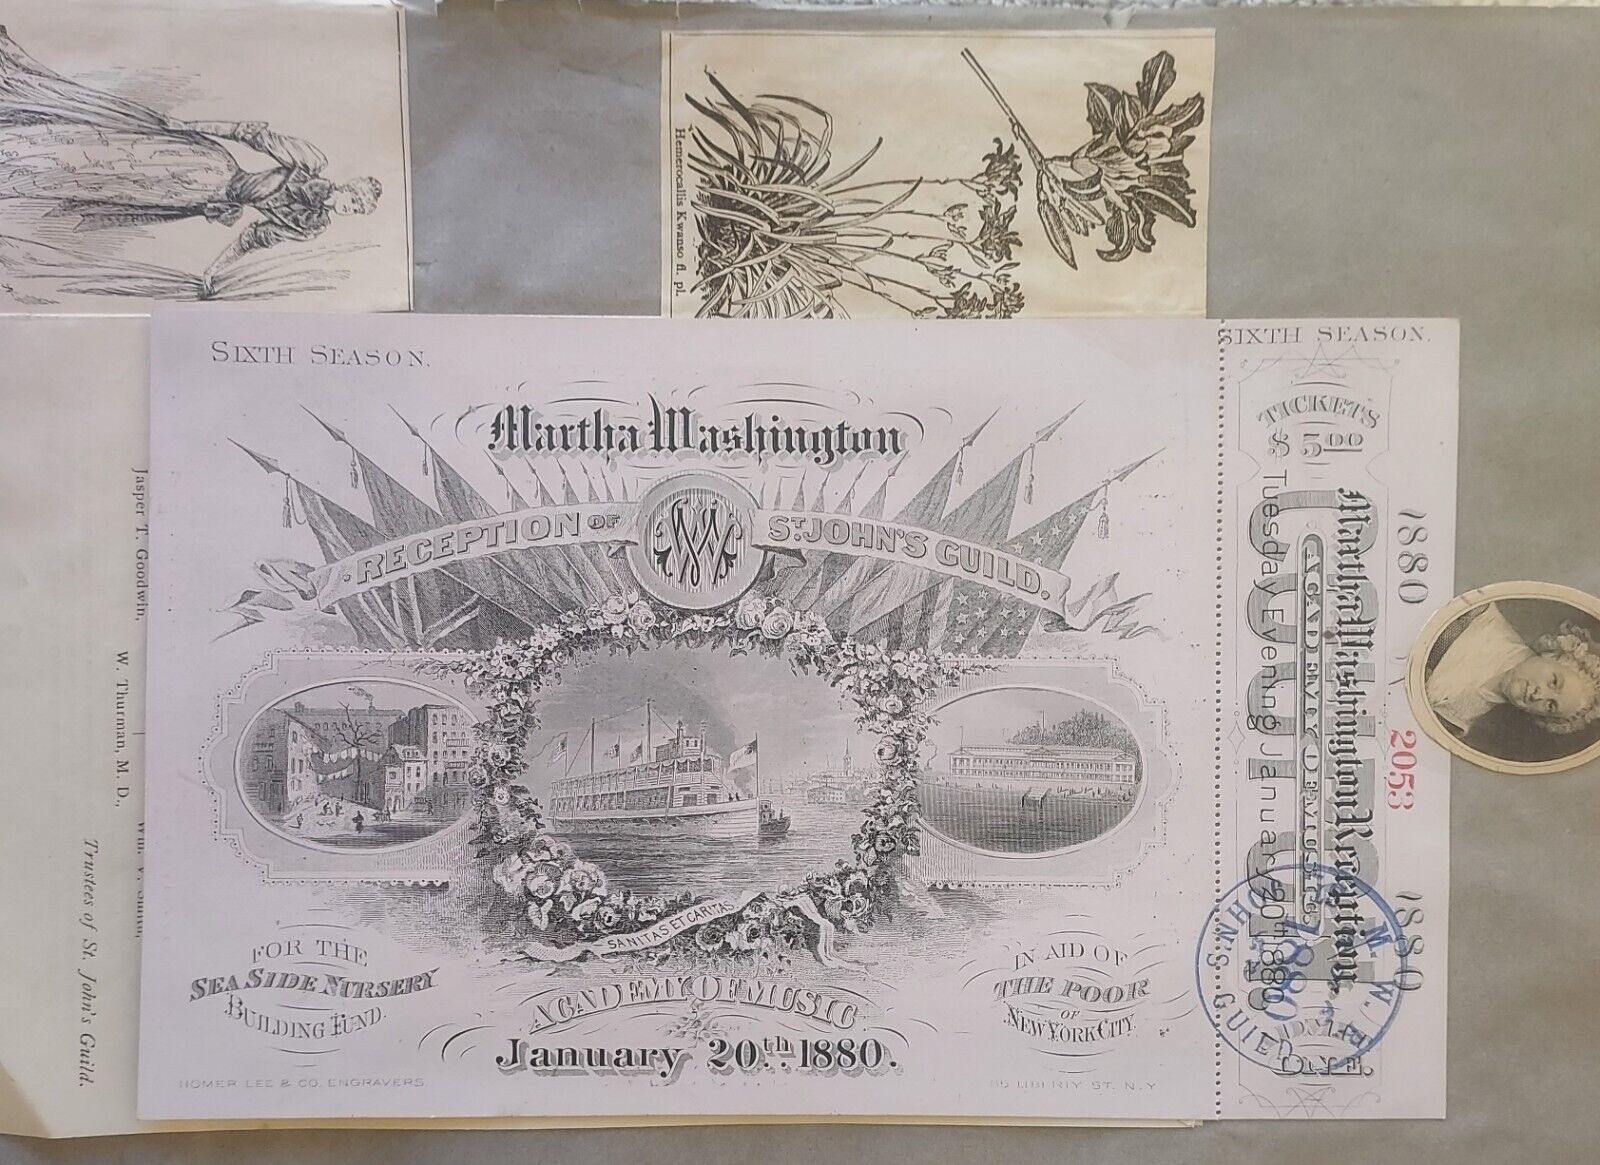 Martha Washington Reception St. John's Guild Academy Homer Lee Bank Note Co 1880